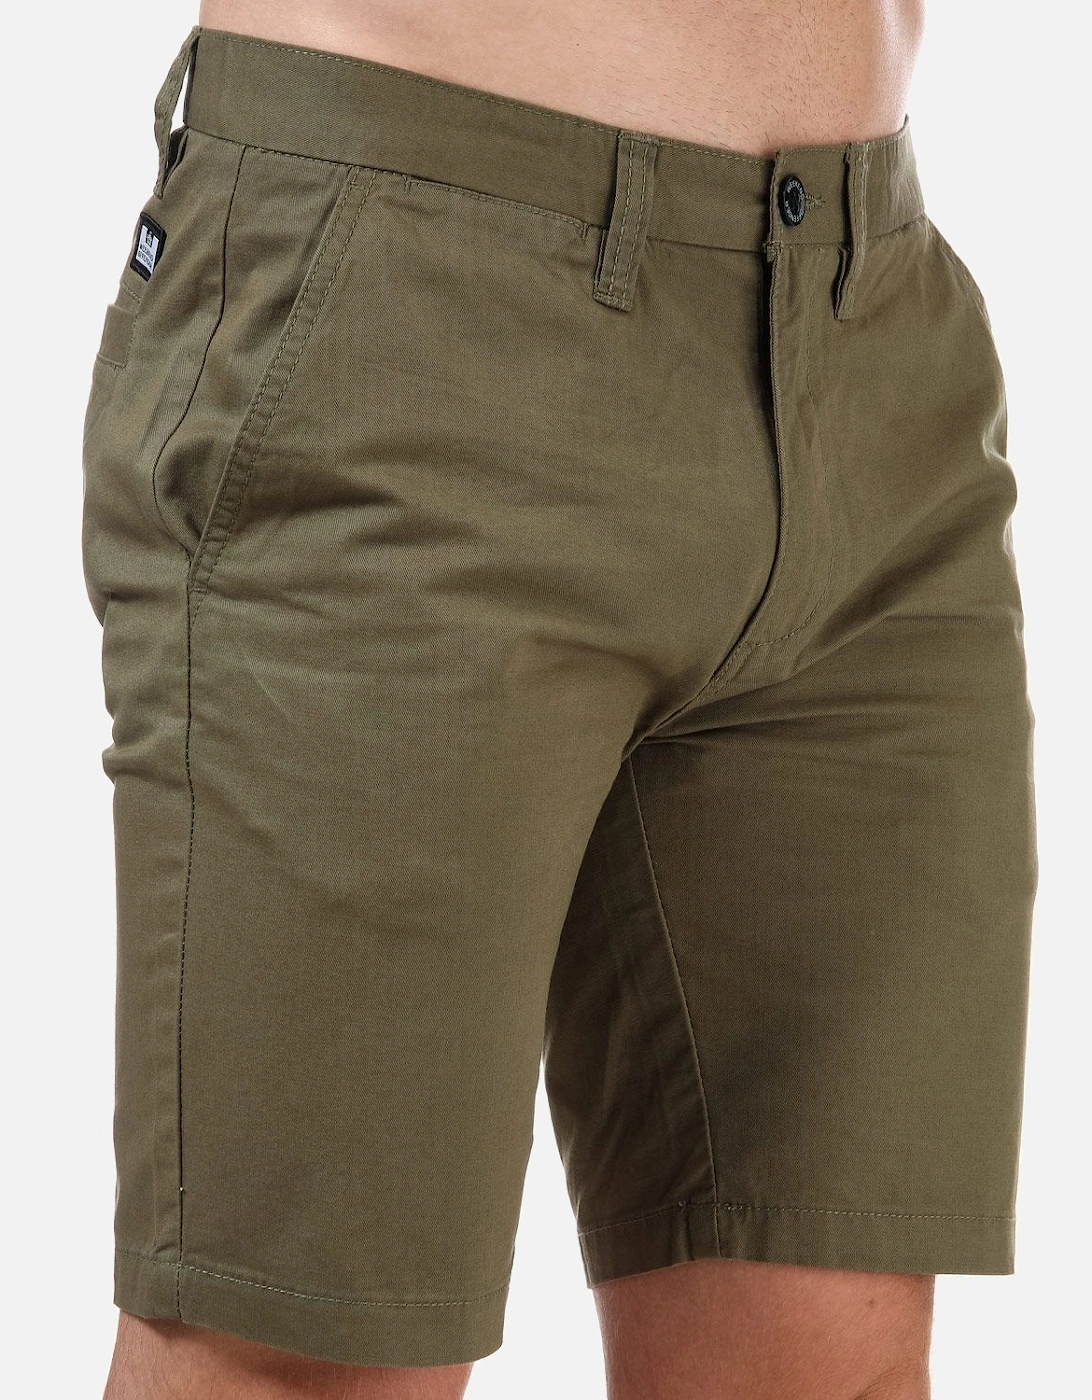 Men's Mens Dillenger Cotton Twill Chino Shorts - Green/Medium (Shade)/Dark (Shade)/Khaki